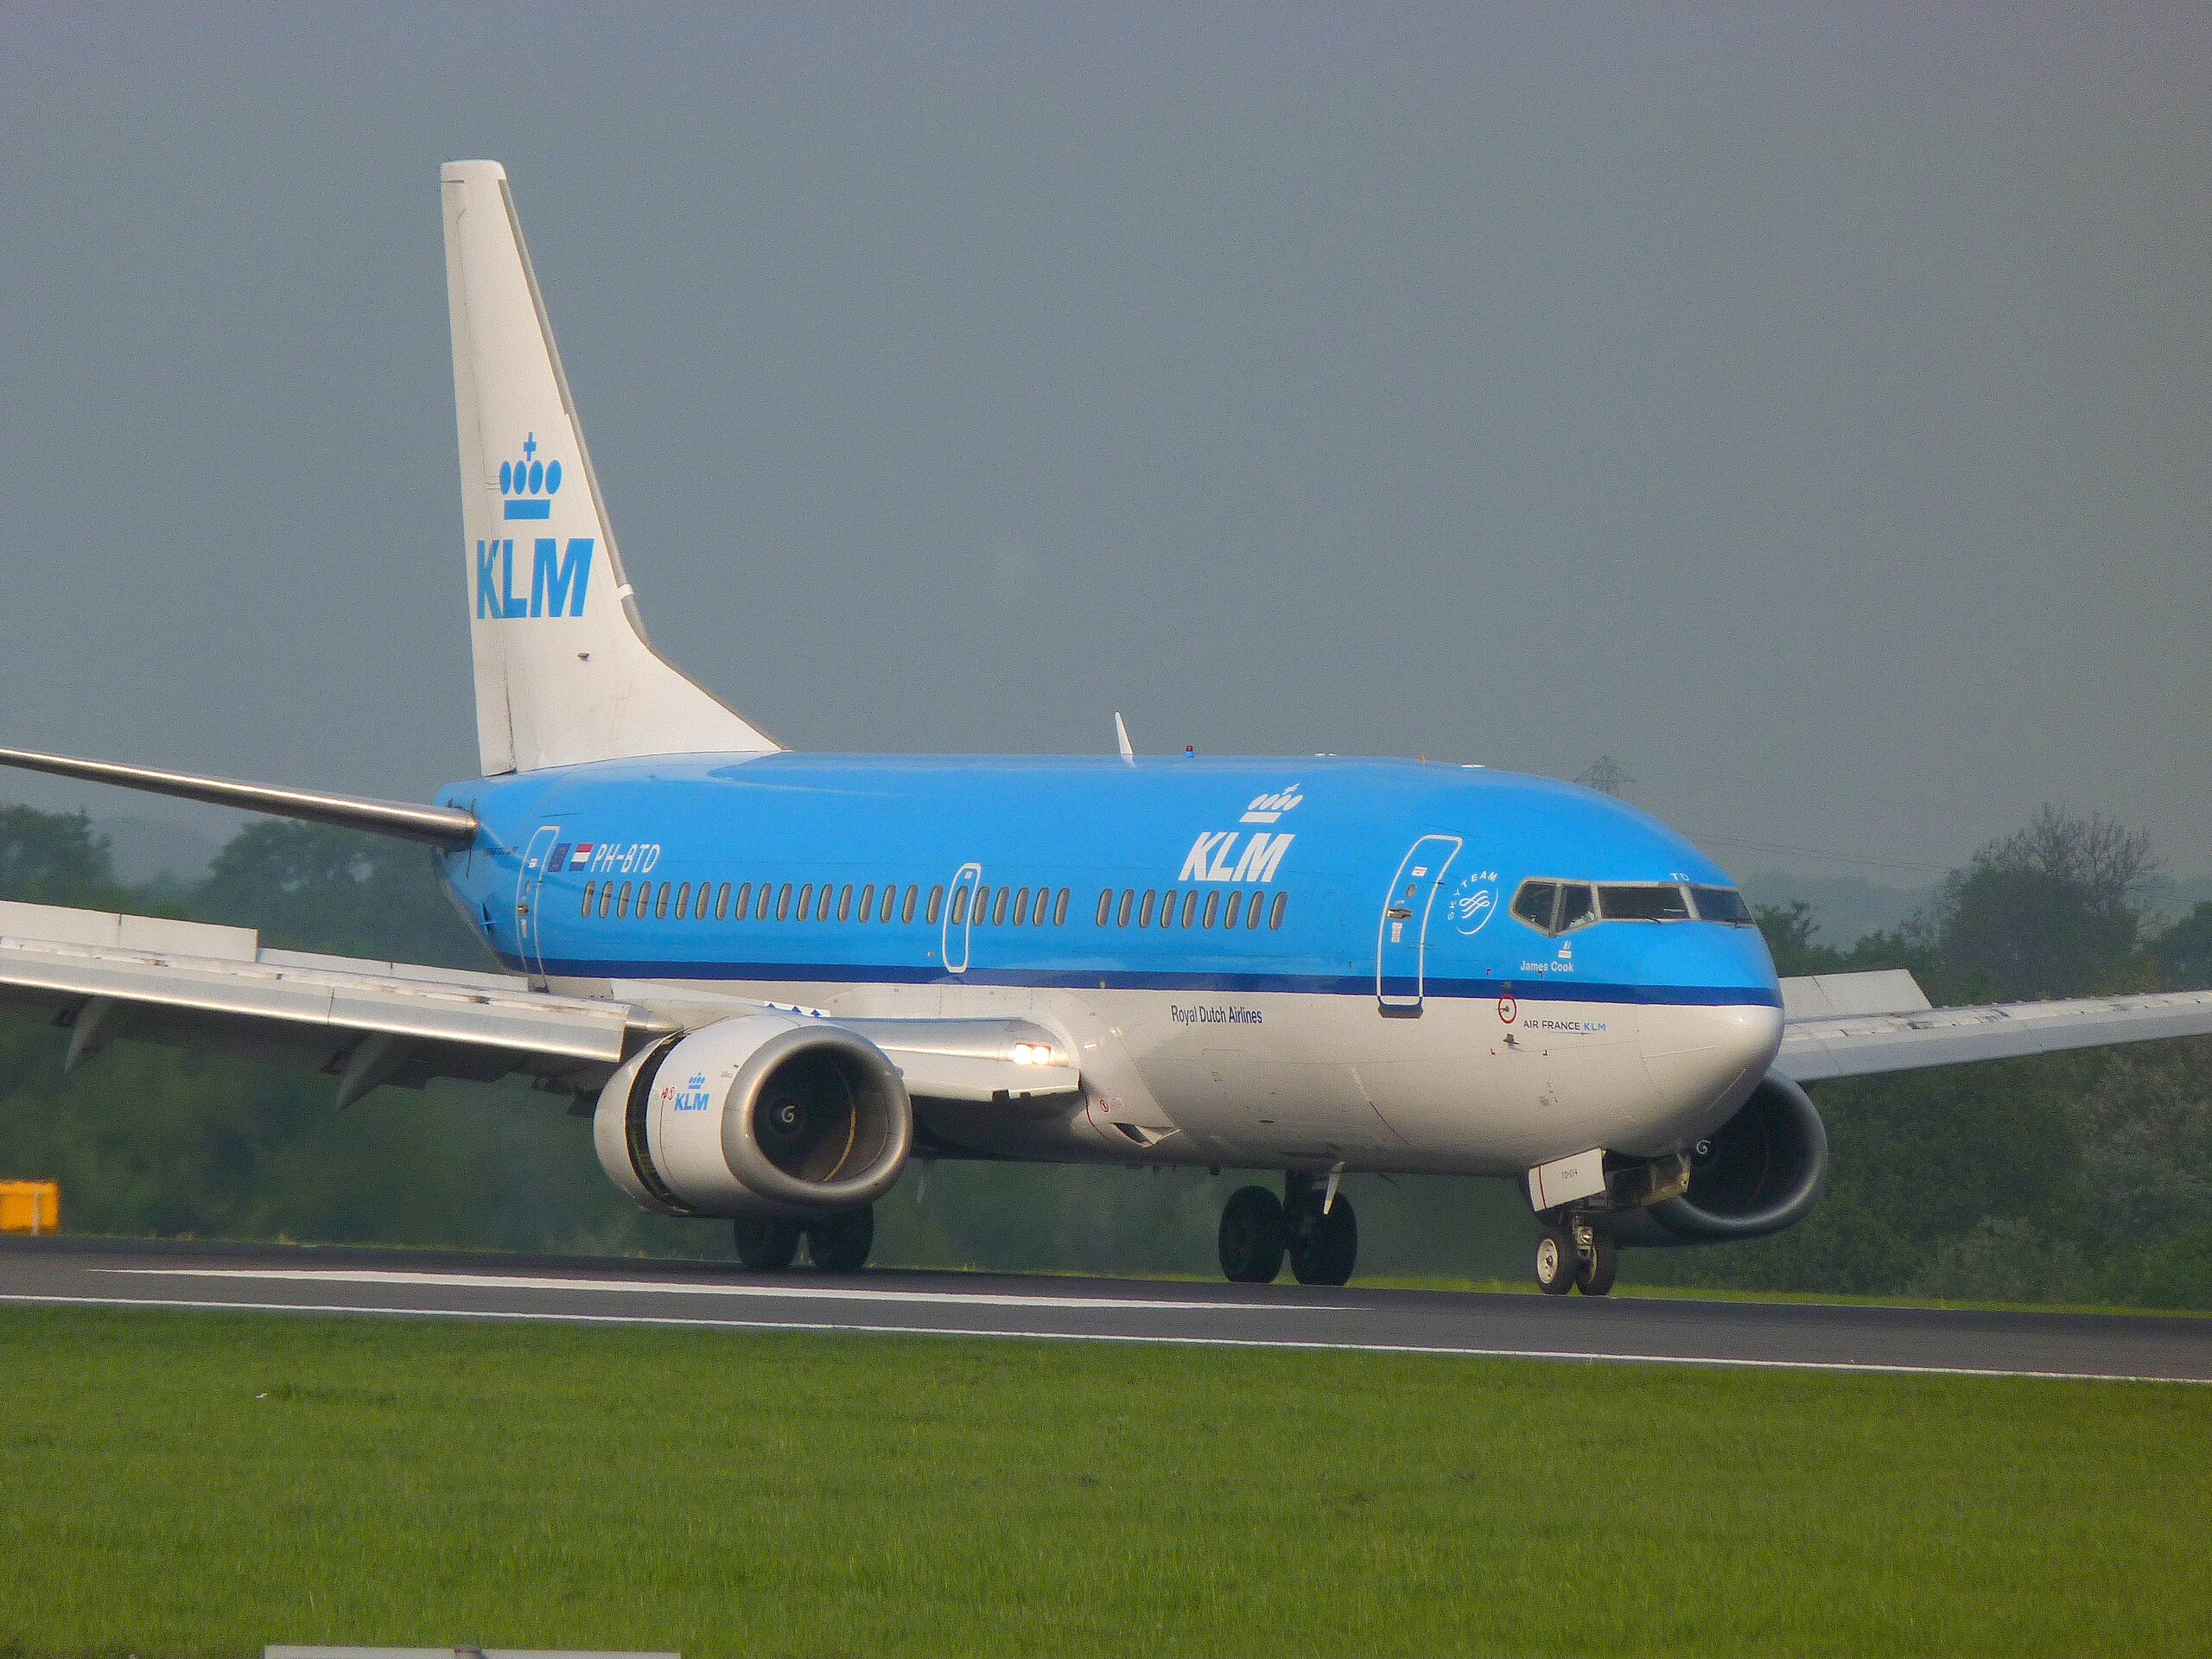 File:Boeing 737-300 (KLM) (5669754719).jpg - Wikimedia Commons